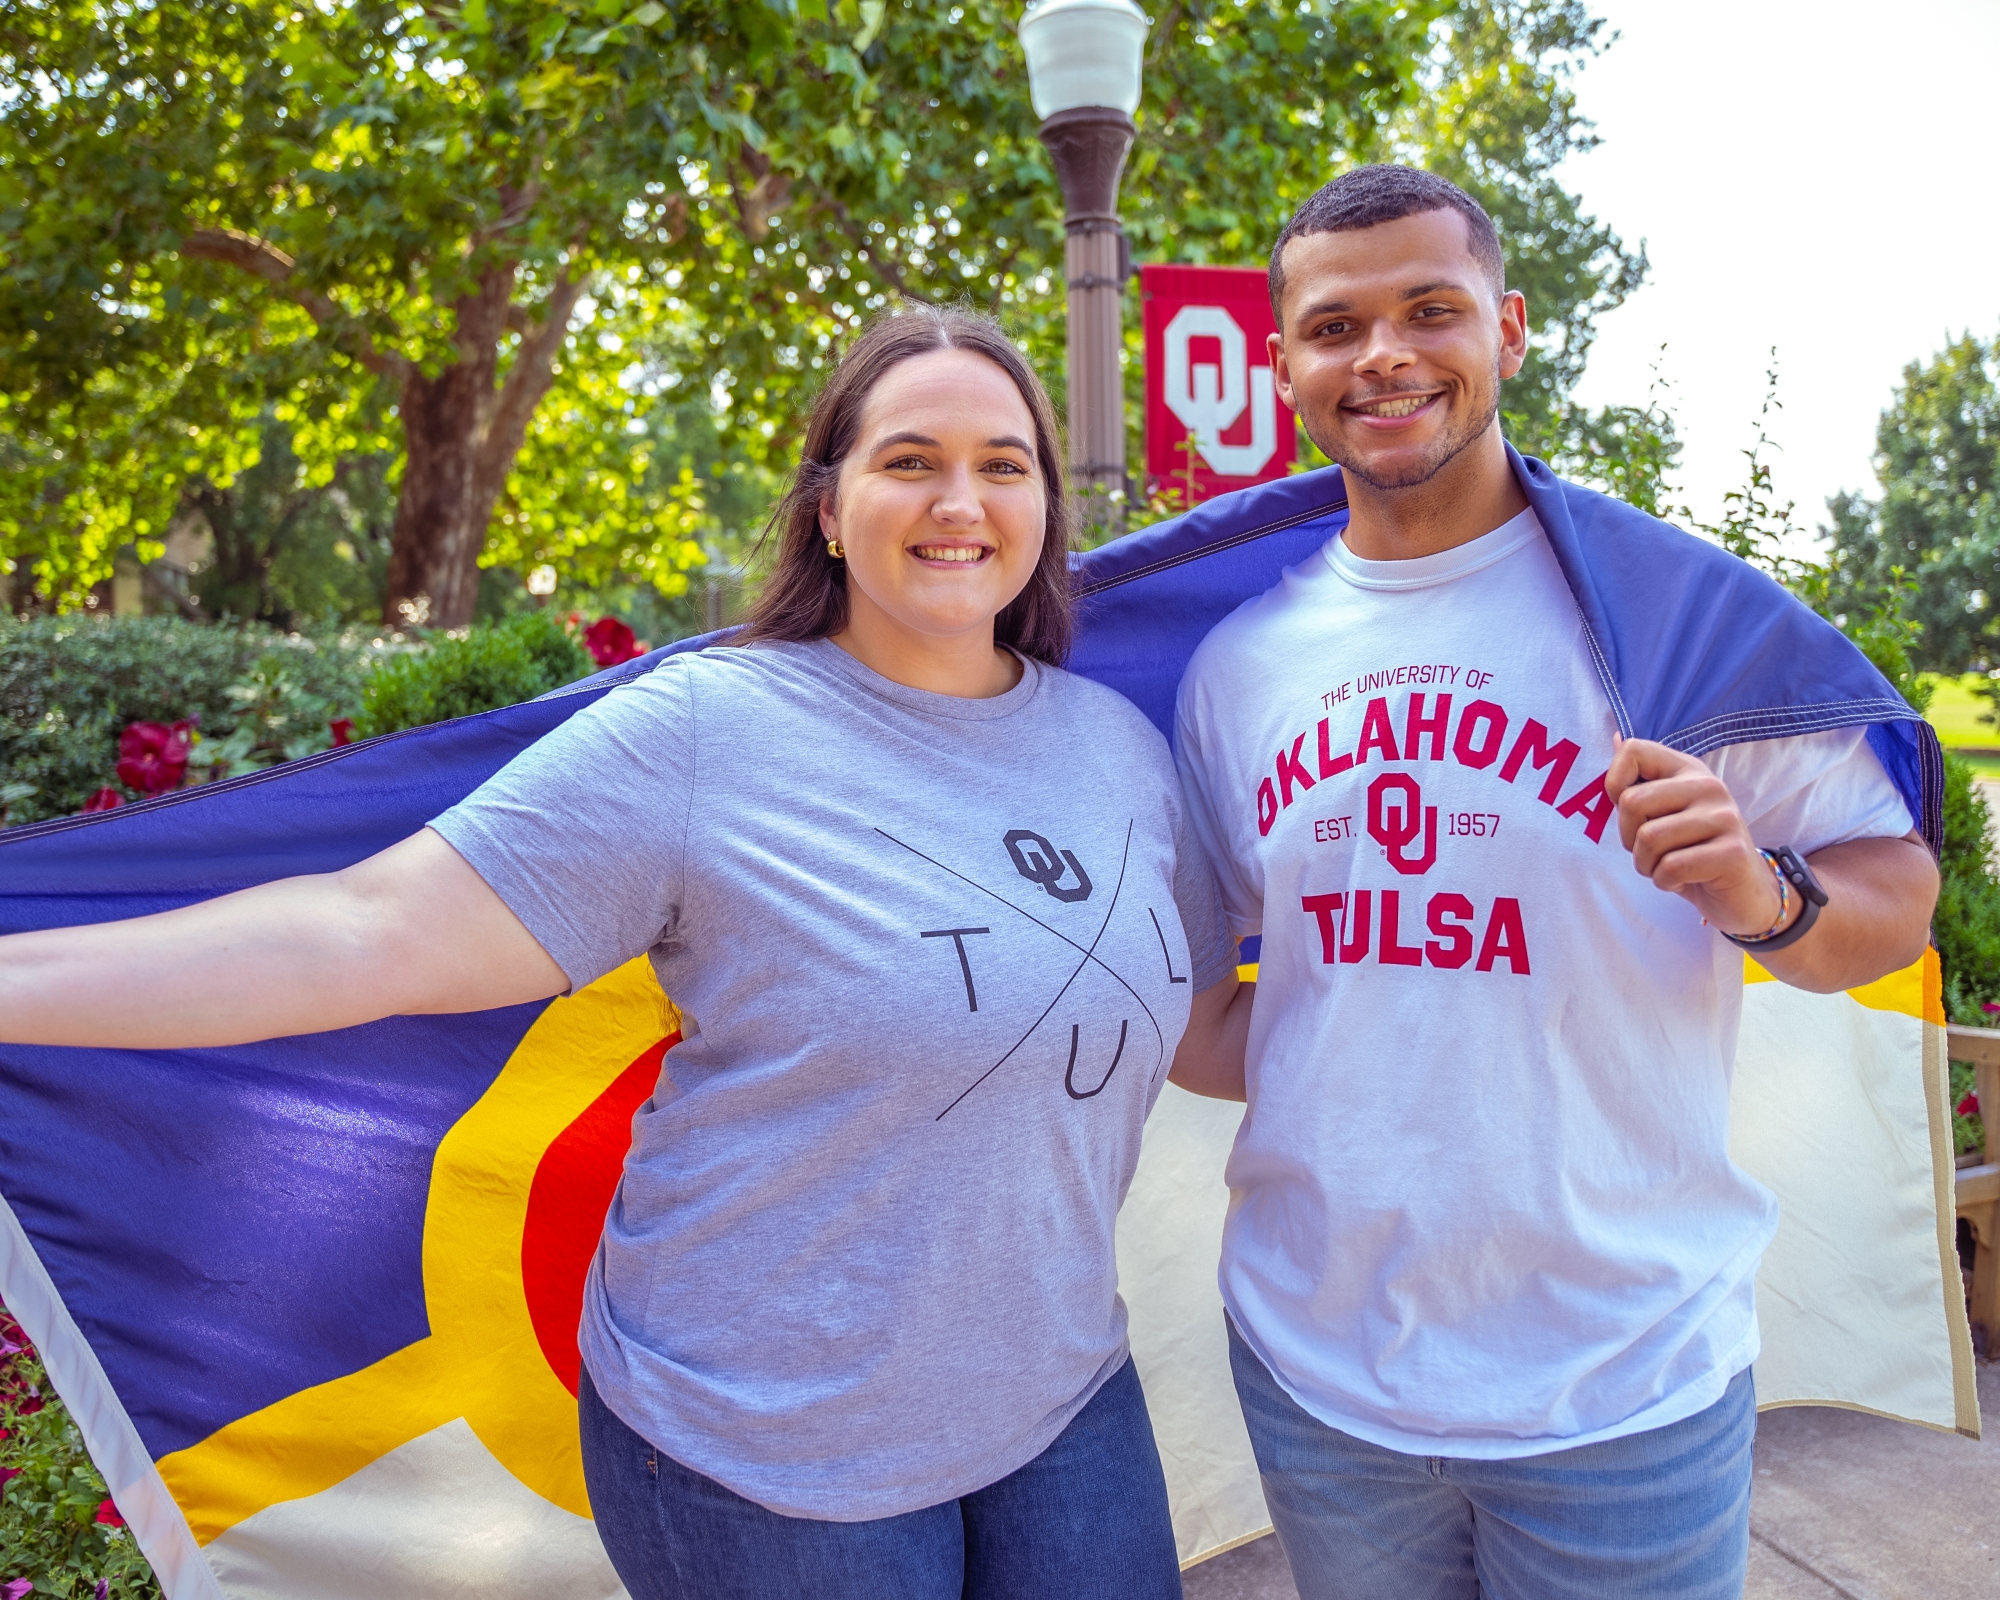 OU-Tulsa Student Pride